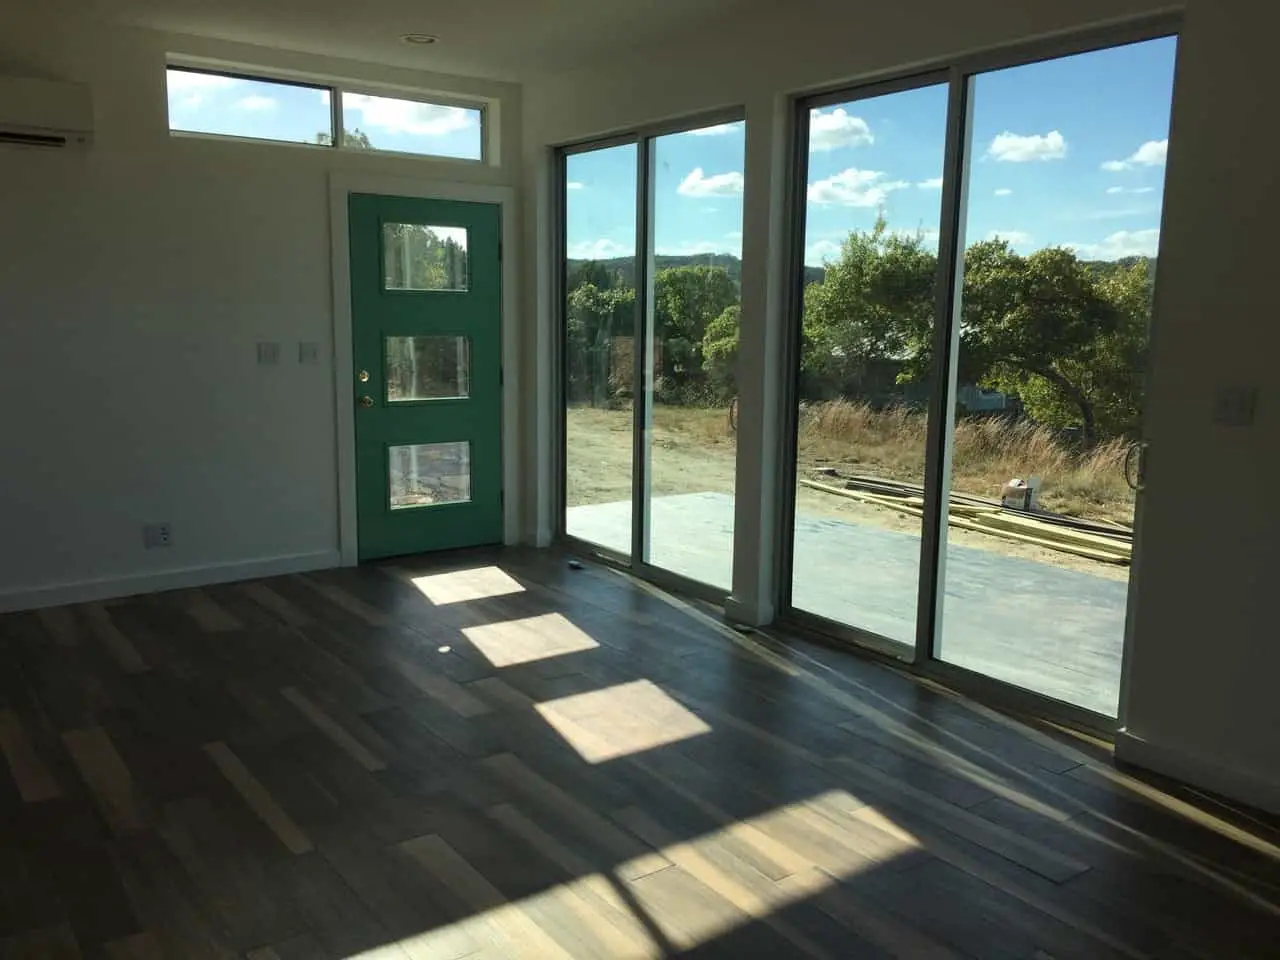 MA Modular Grand-Ma prefab home interior living area and sliding glass doors to rear deck.